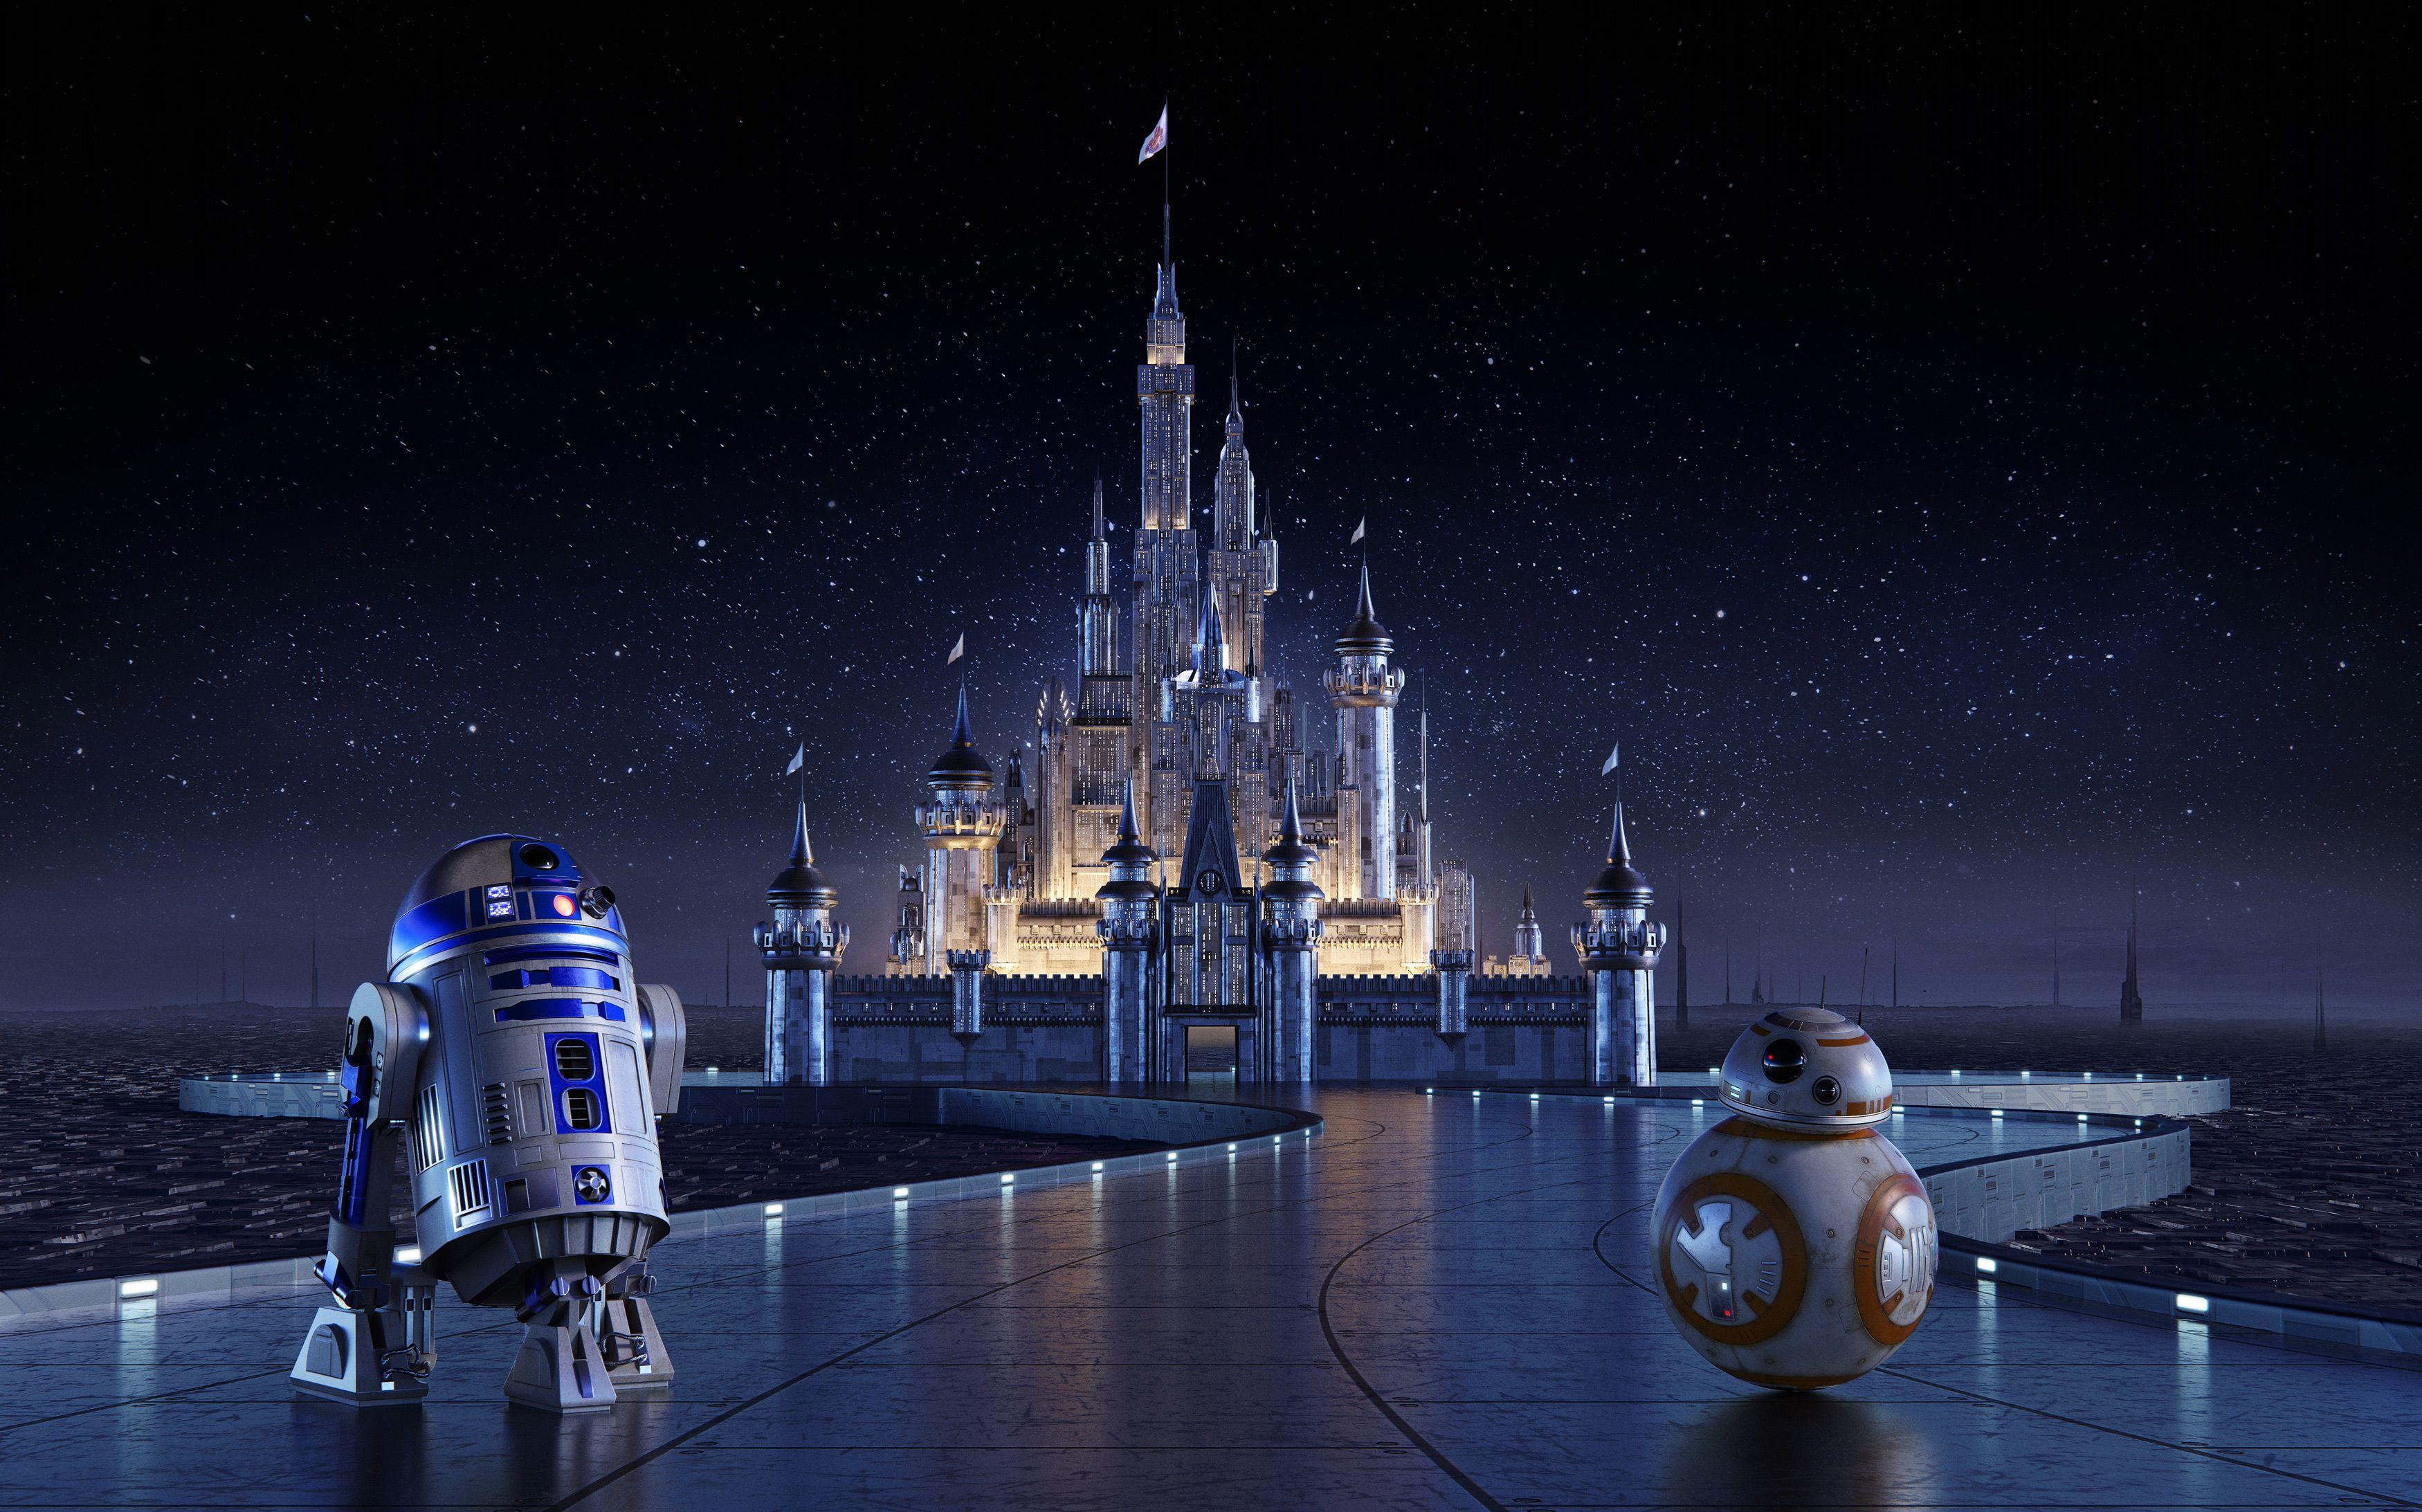 Wallpaper Disney Castle, R2 D BB Star Wars, Cinderella Castle, 4K, Creative Graphics,. Wallpaper For IPhone, Android, Mobile And Desktop